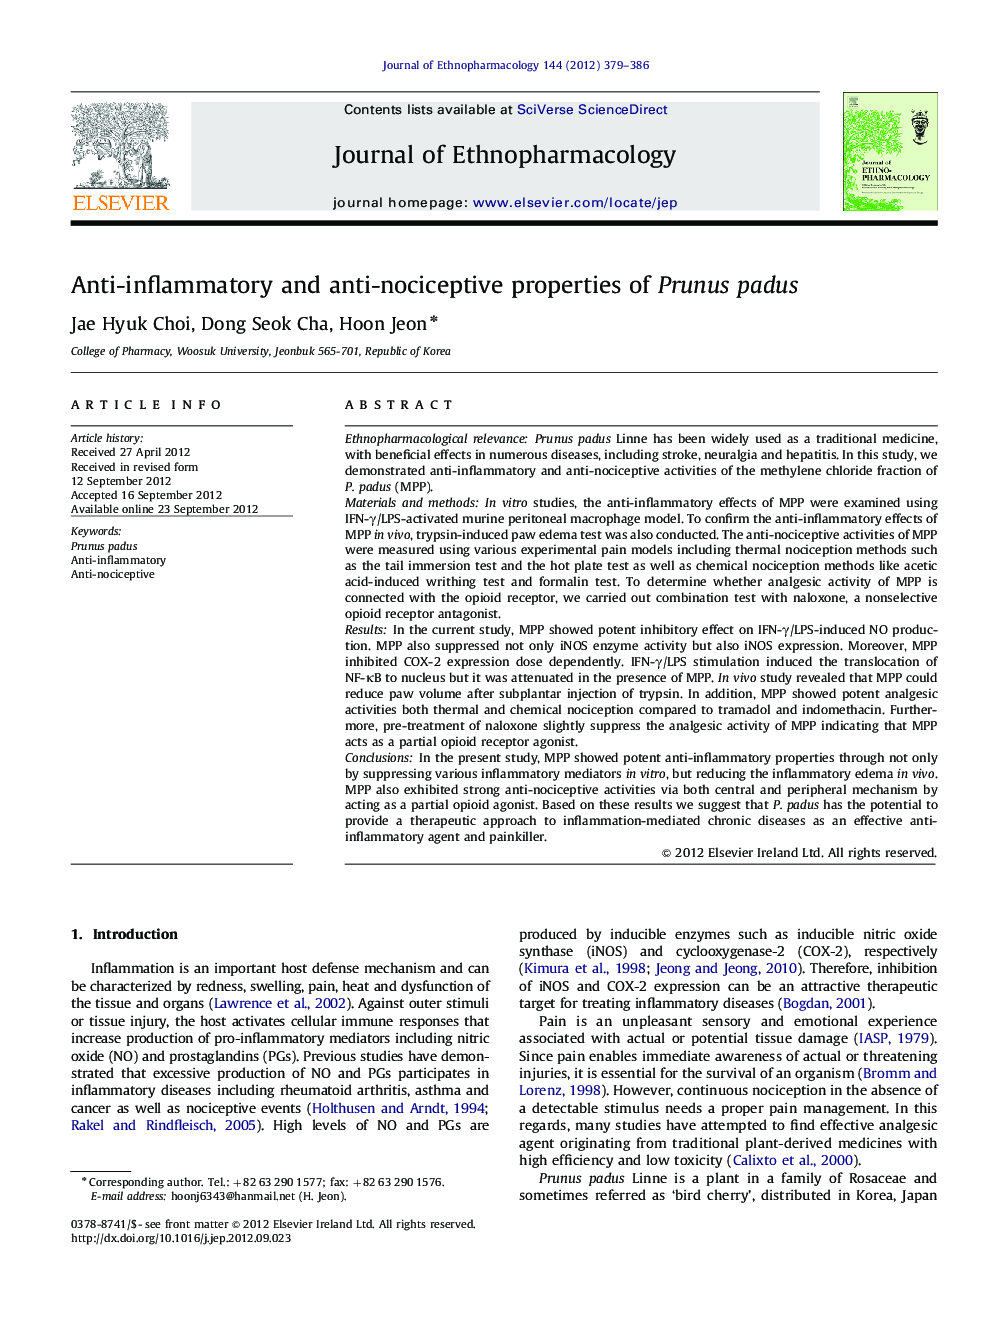 Anti-inflammatory and anti-nociceptive properties of Prunus padus